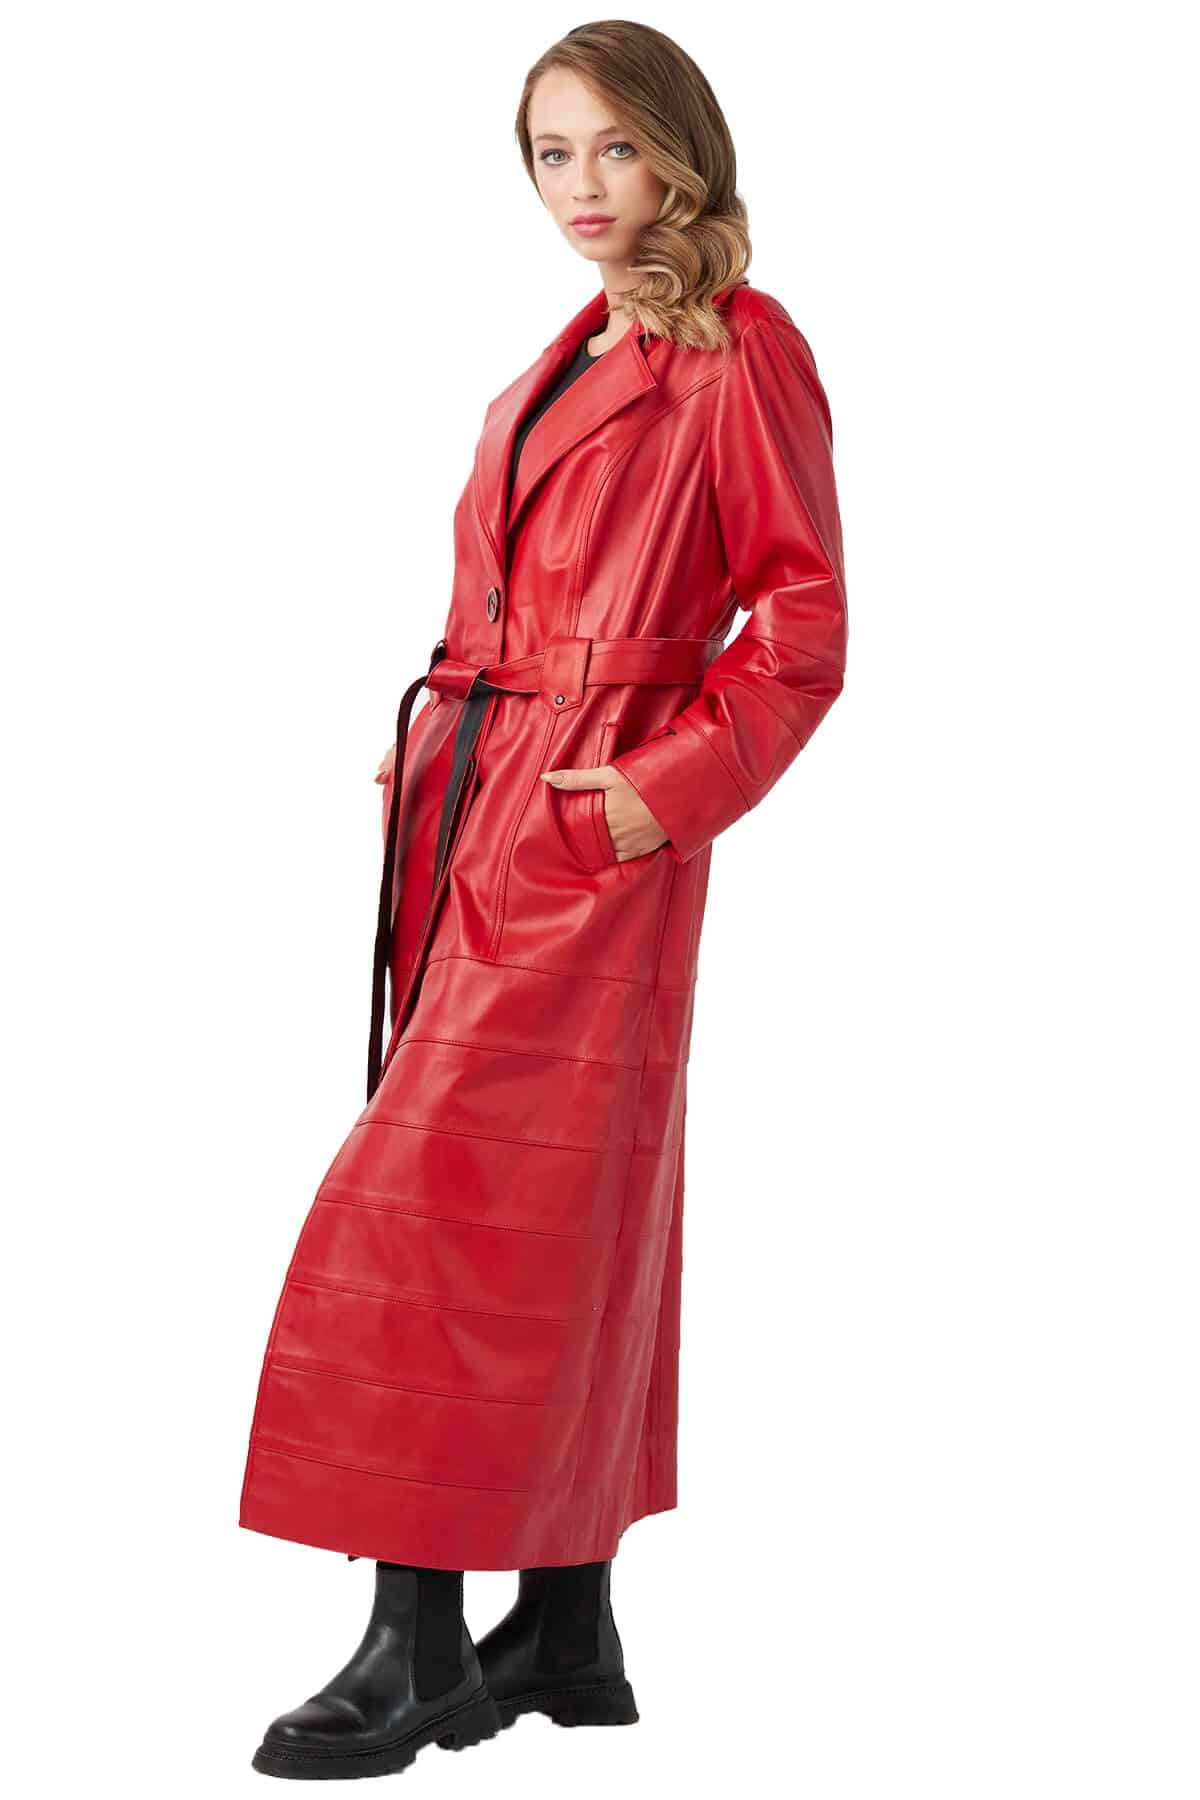 rita-genuine-leather-womens-topcoat-red-3